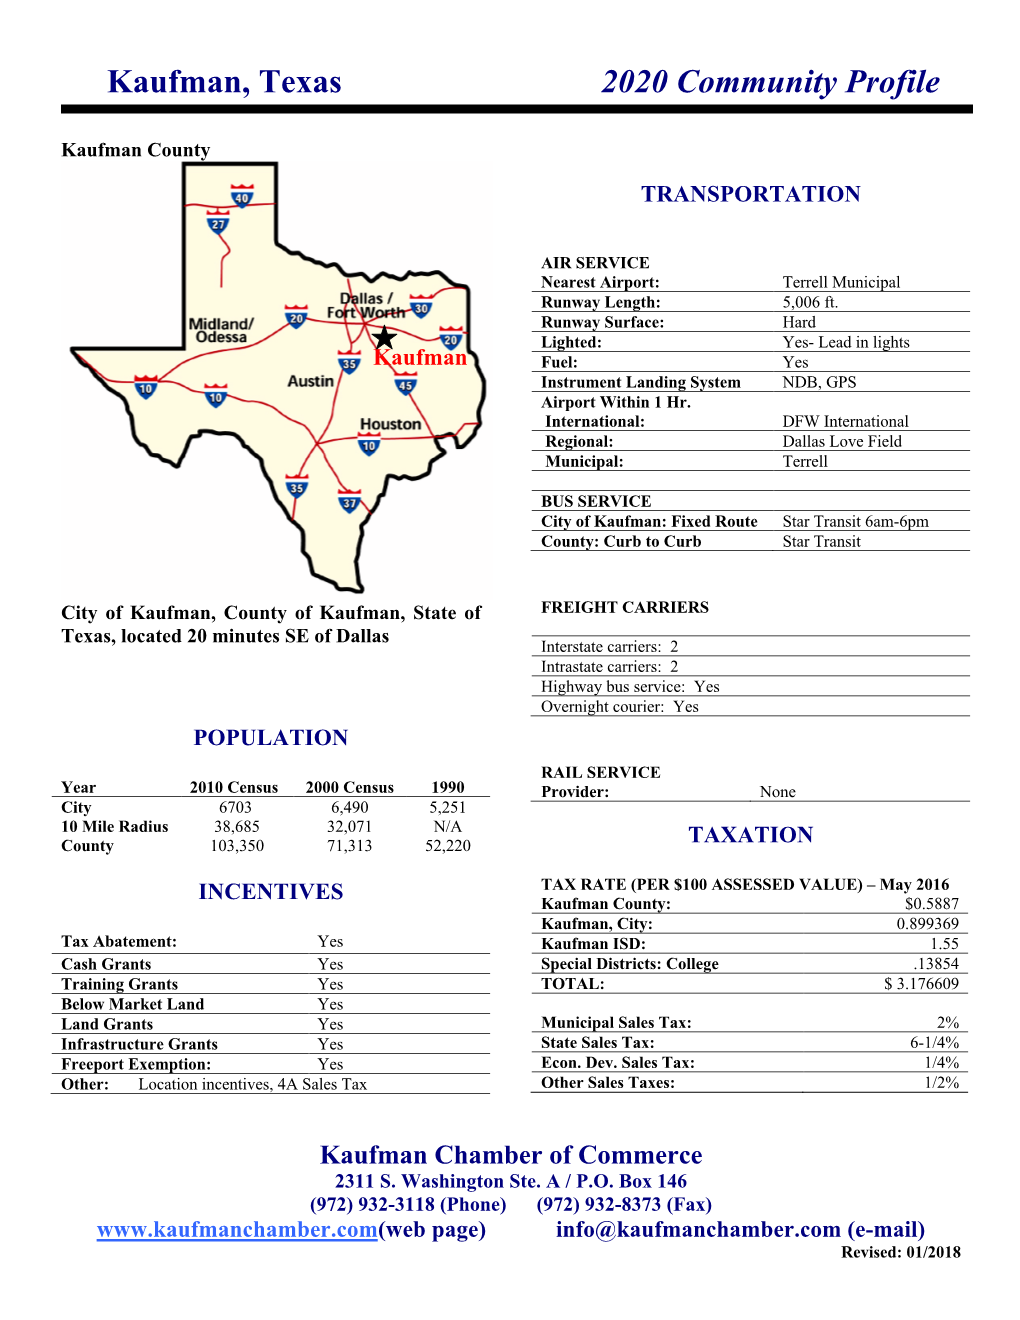 Kaufman, Texas 2020 Community Profile